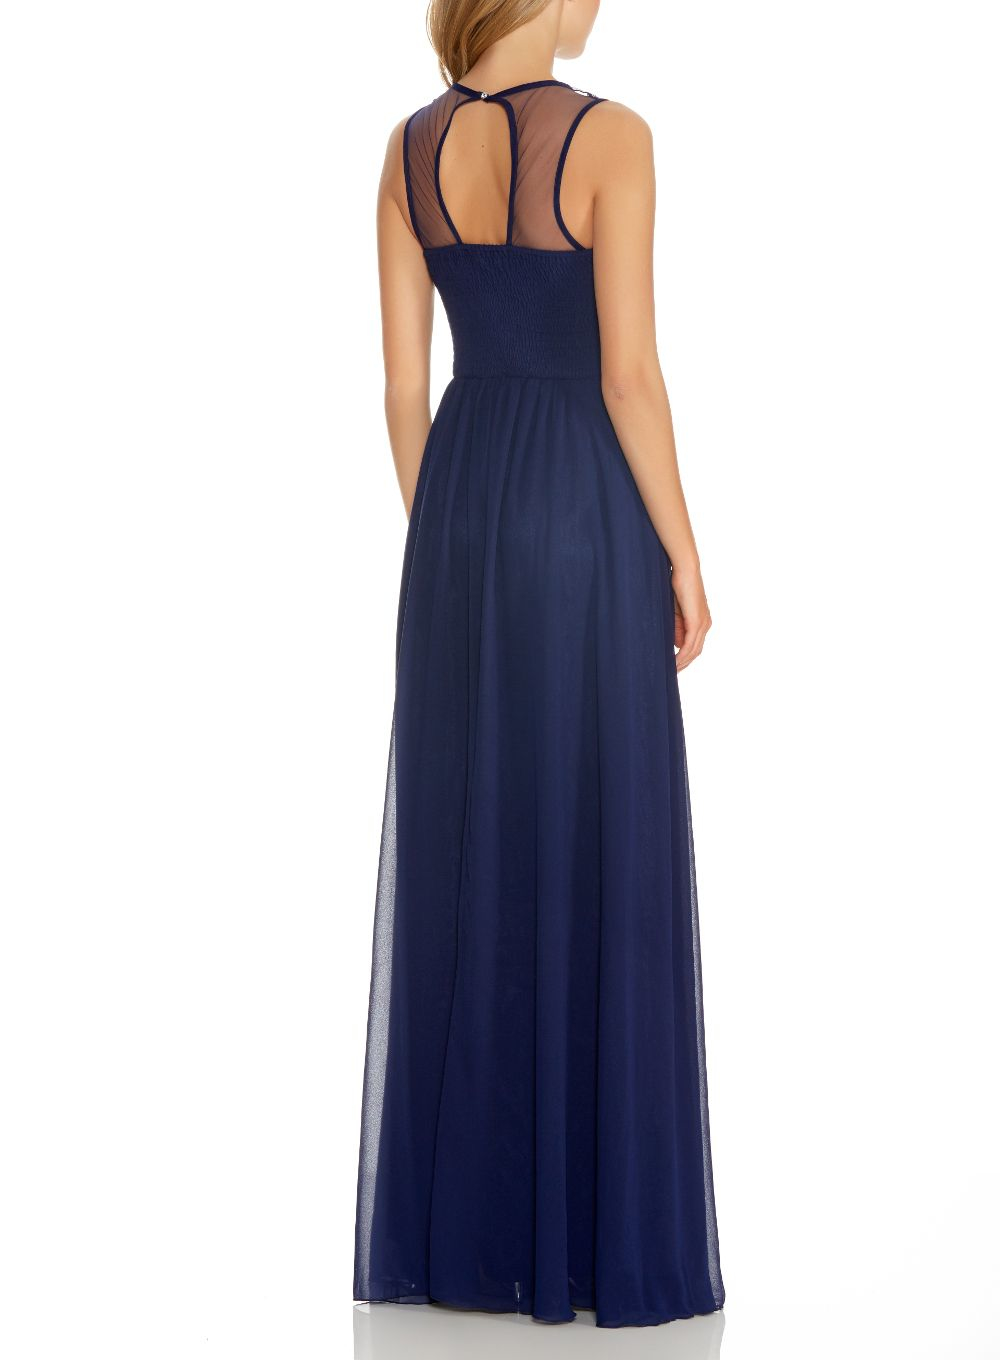 Quiz Navy Chiffon Lace Sequin Maxi Dress in Blue Lyst